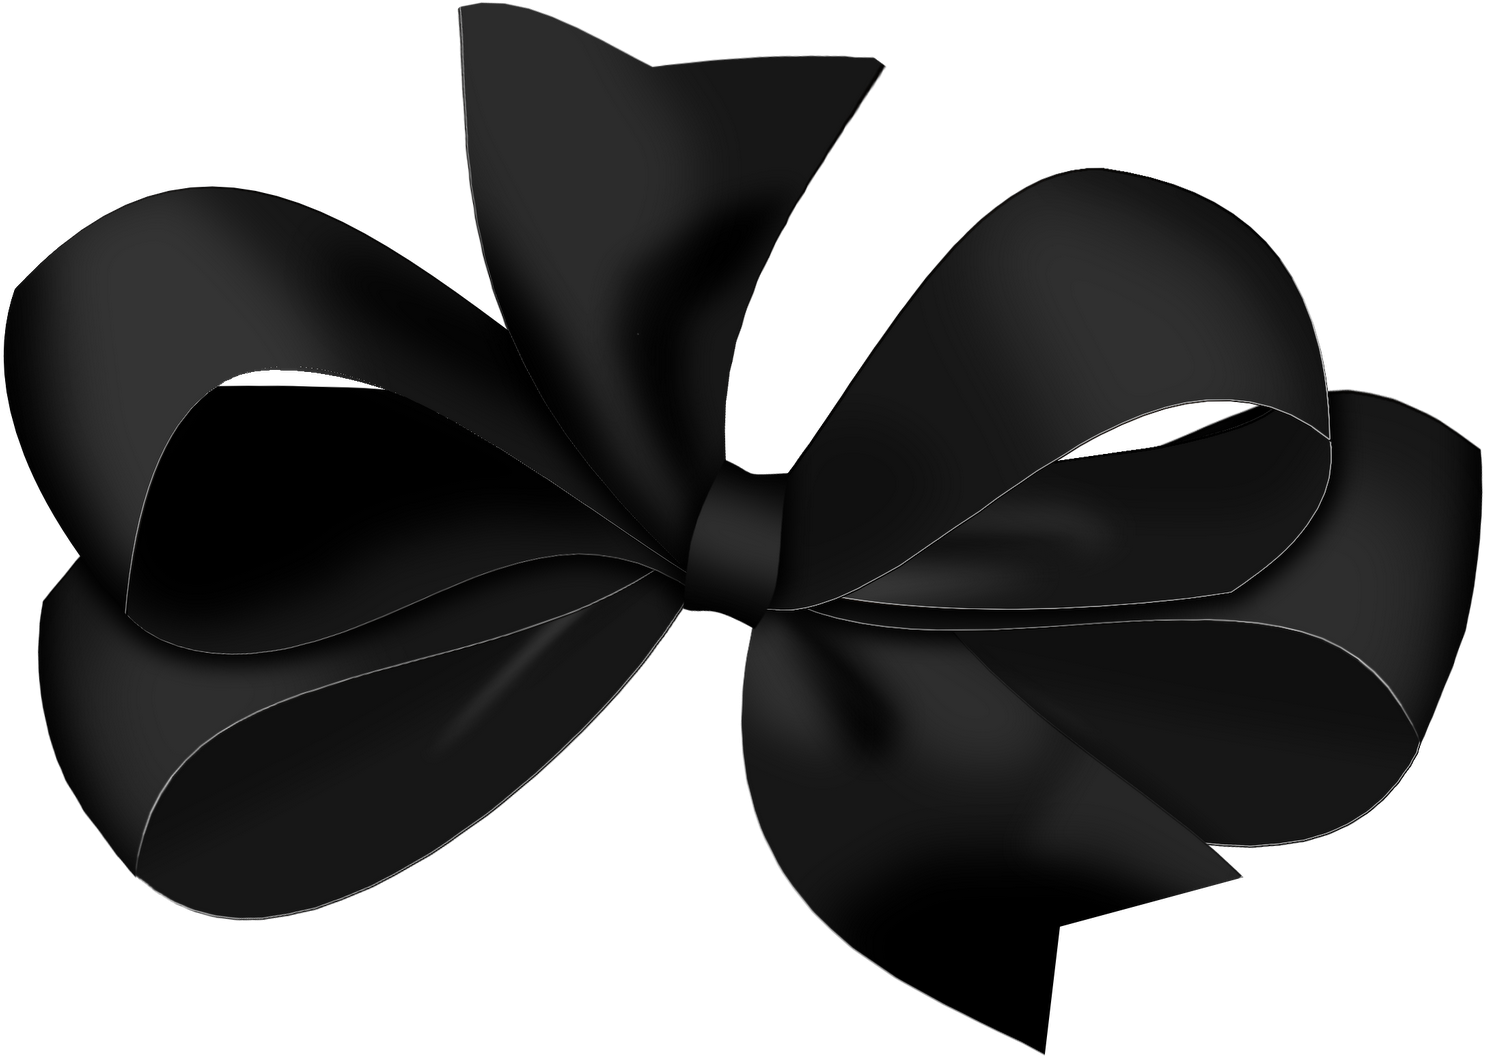 Black Ribbon Symbolof Mourning.png PNG